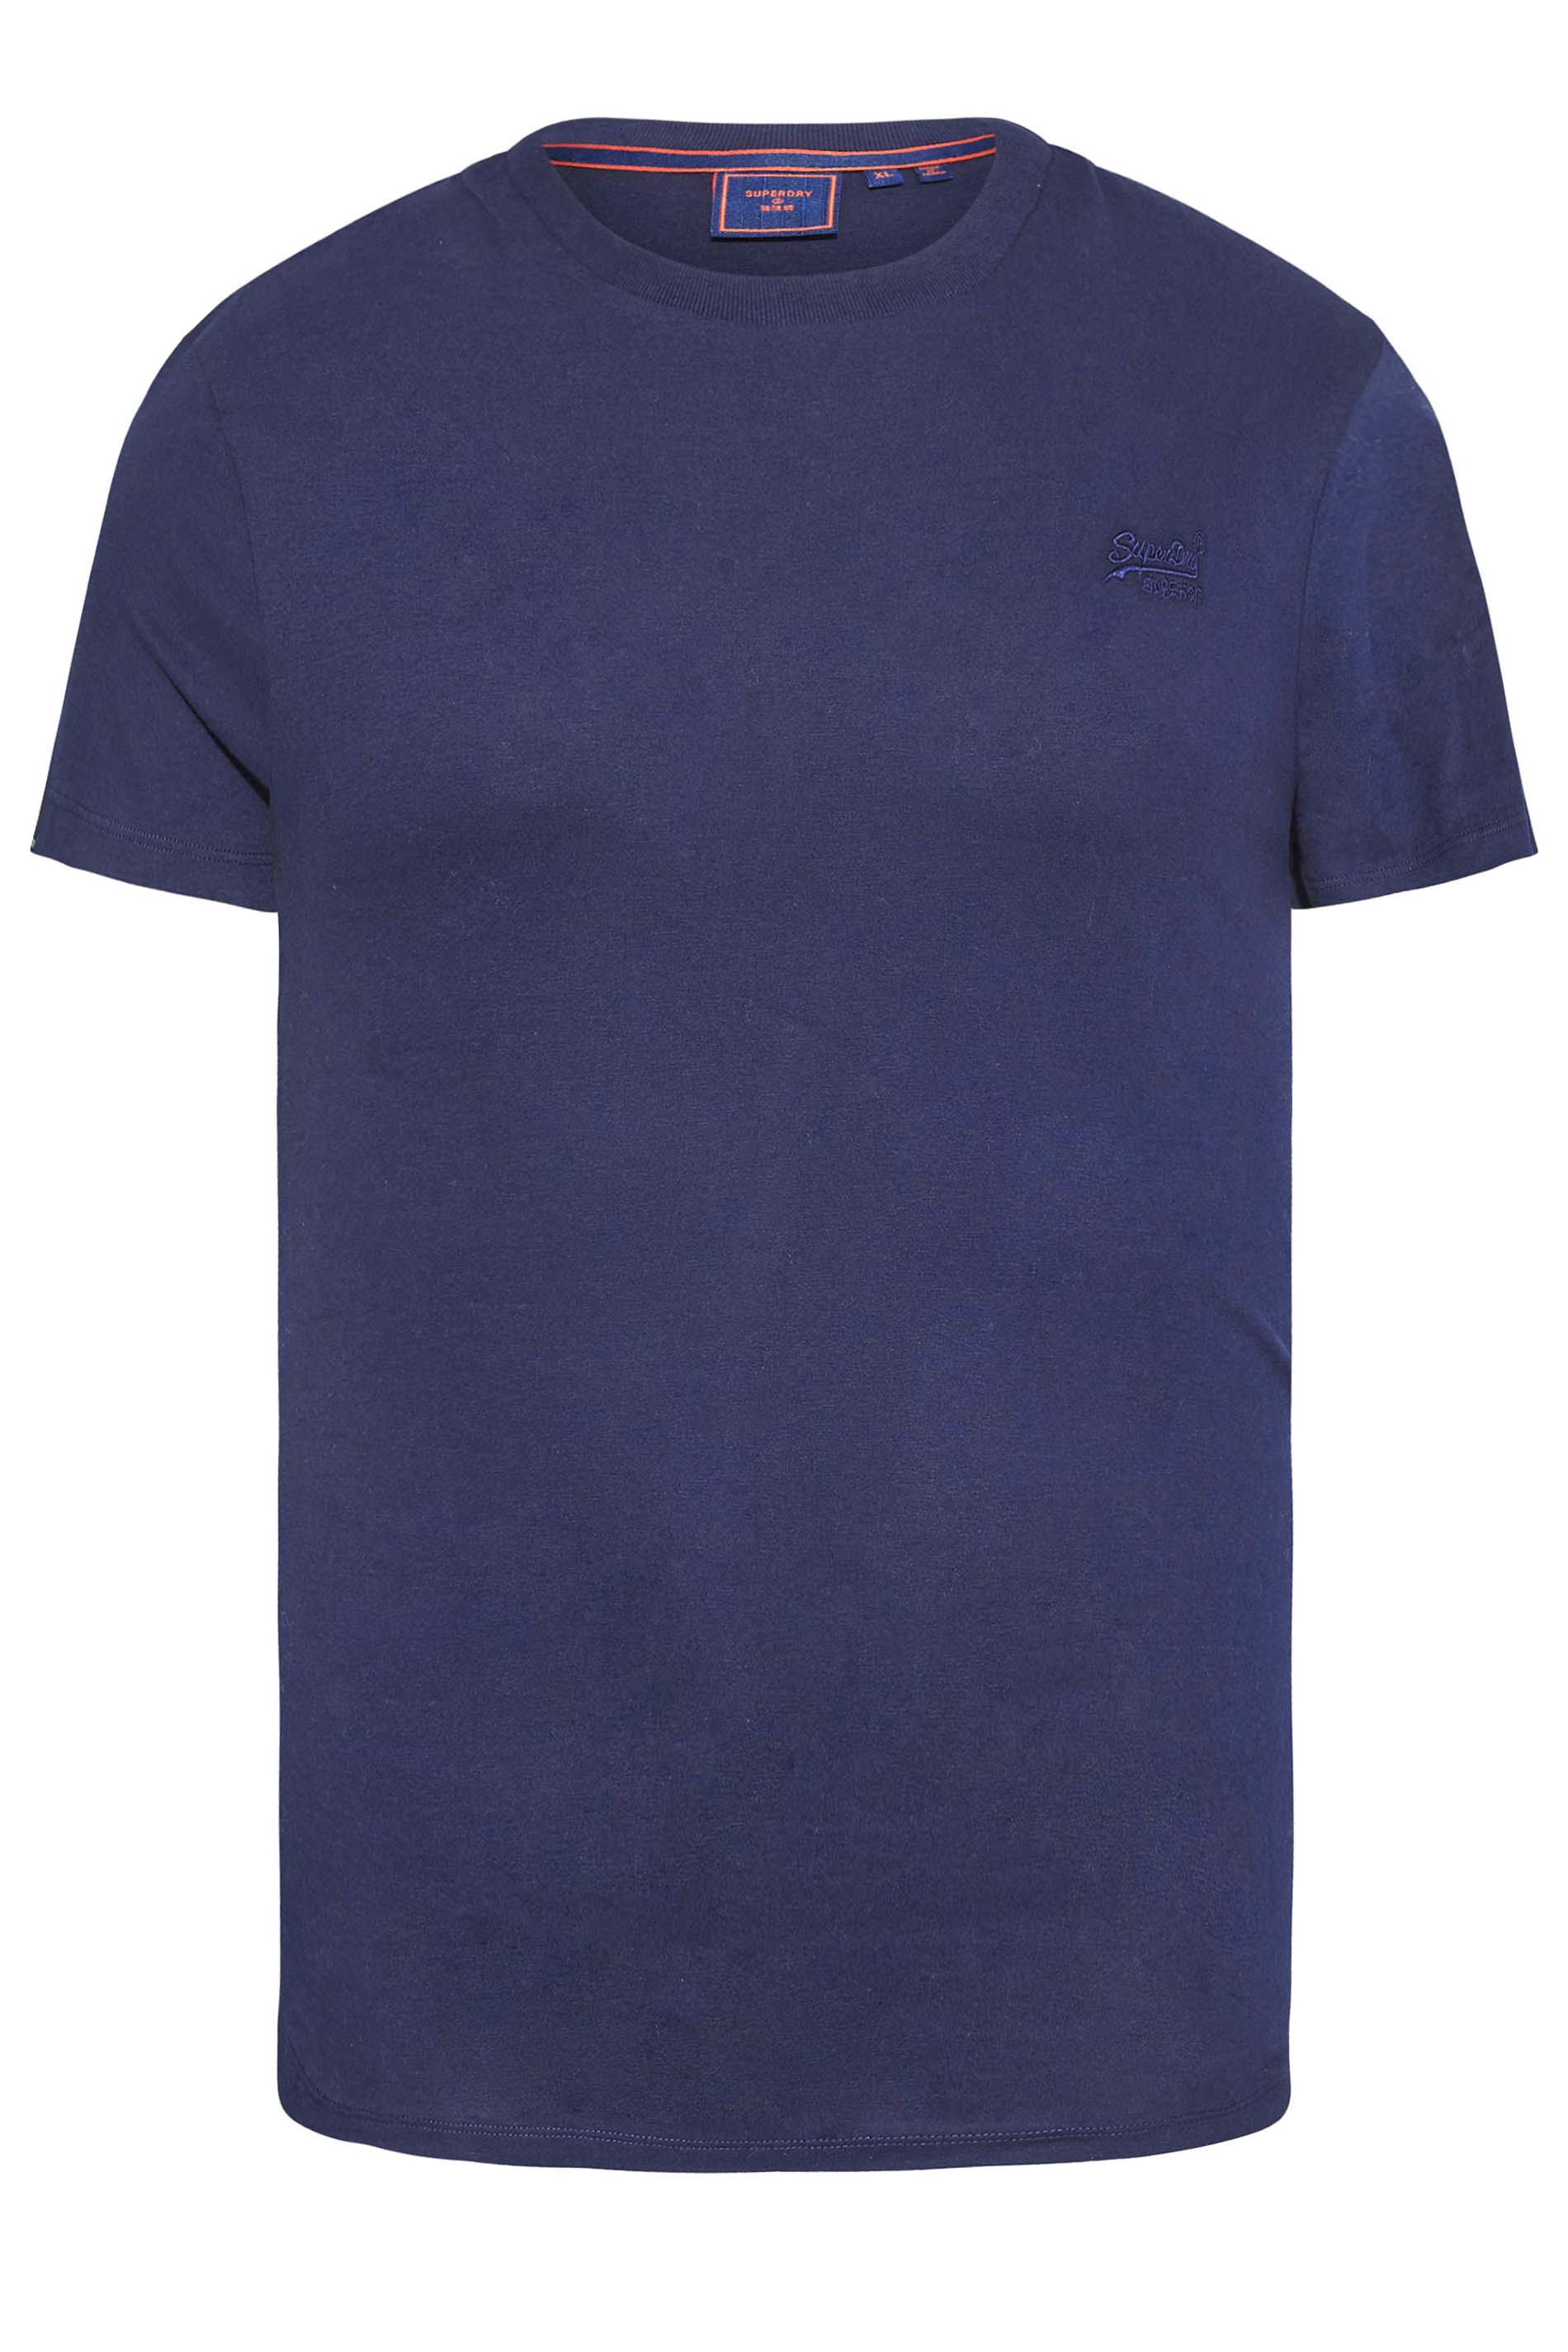 SUPERDRY Big & Tall Navy Blue Vintage T-Shirt 1